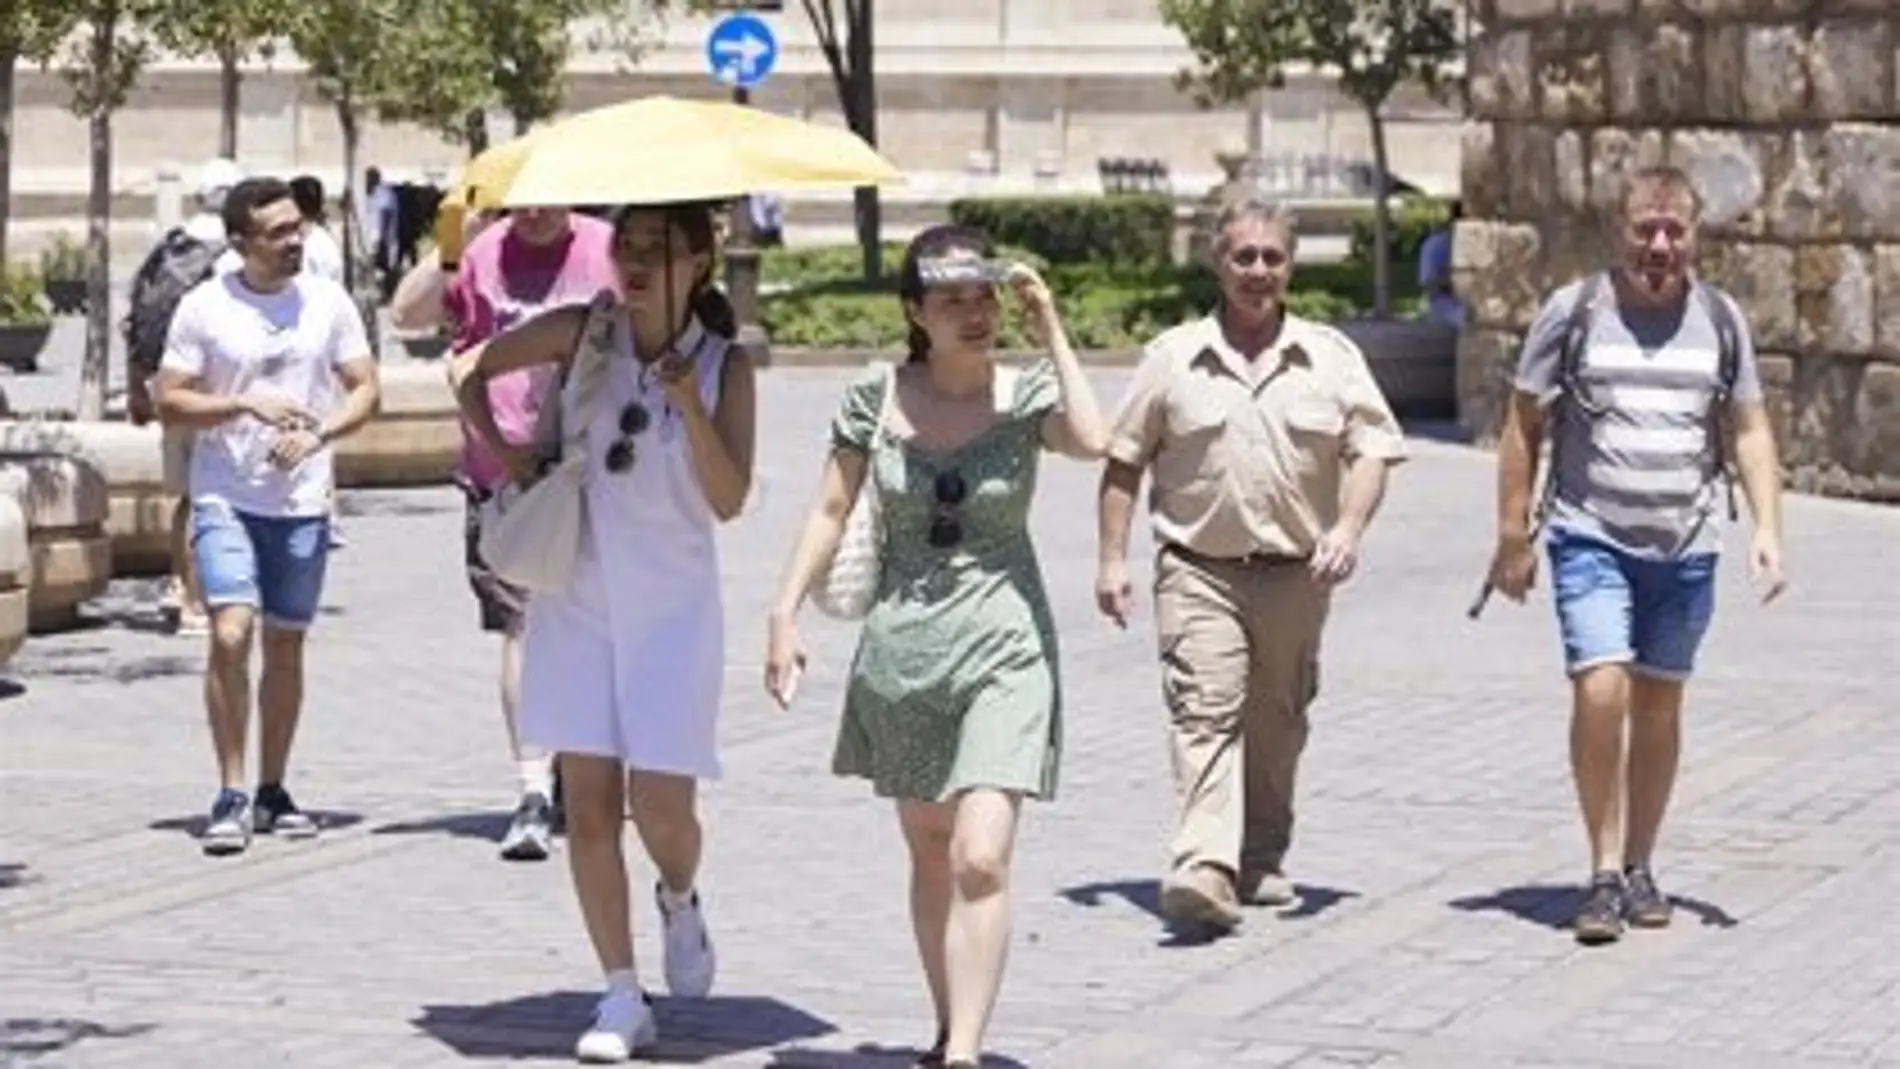 Una mujer porta un paragua para resguardarse del sol en Sevilla.